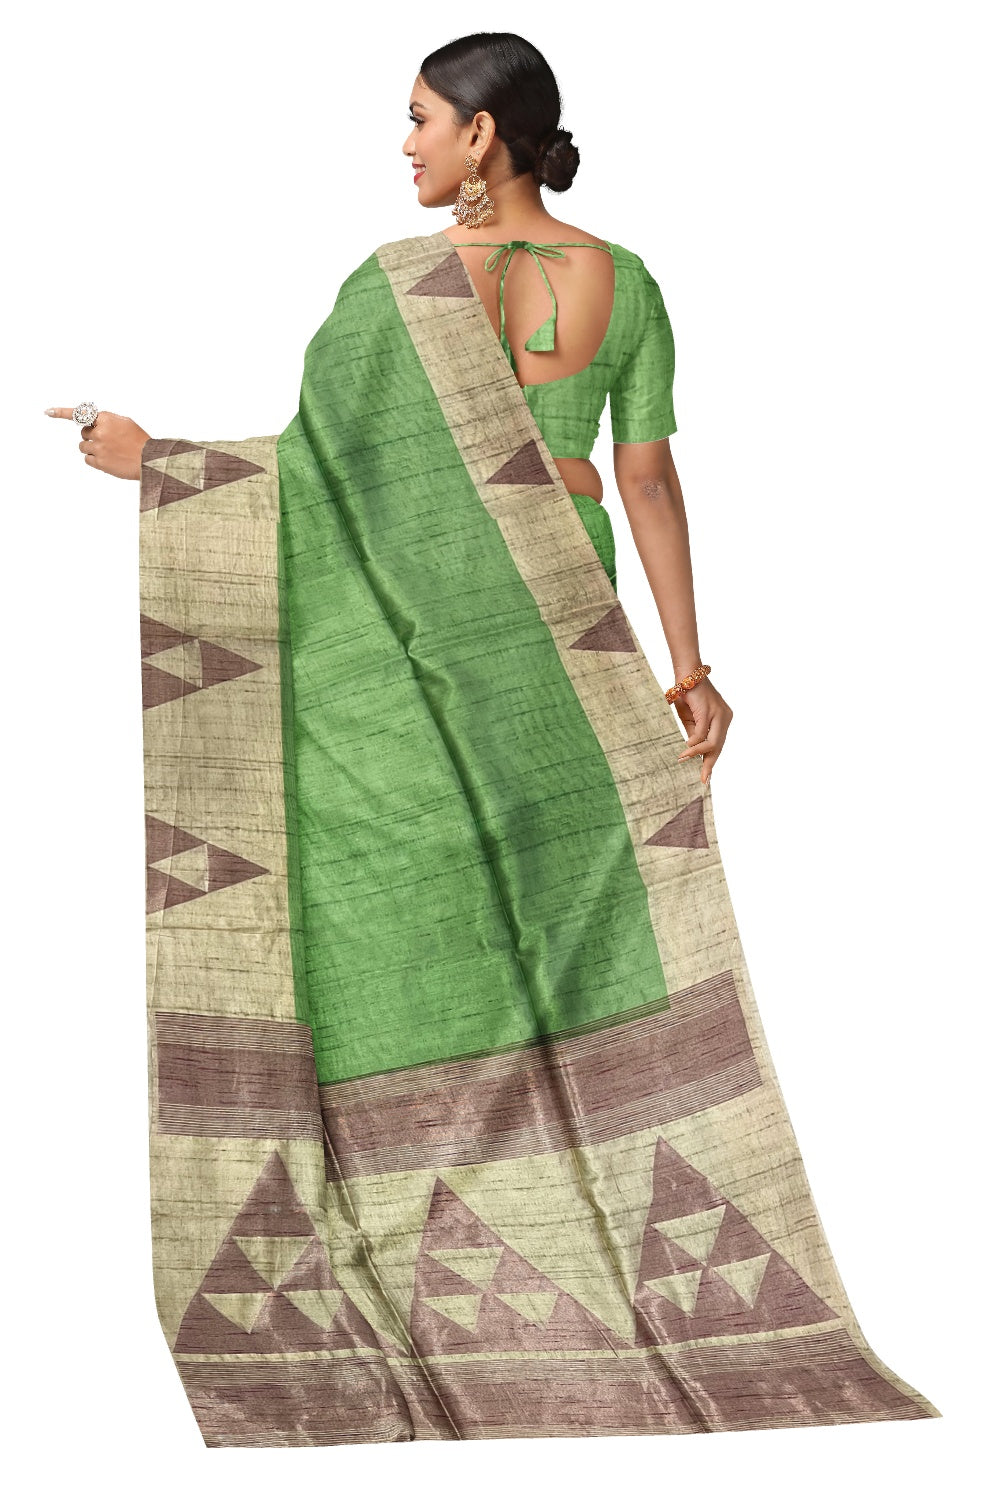 Southloom Green Semi Tussar Saree with Light Brown Designer Pallu